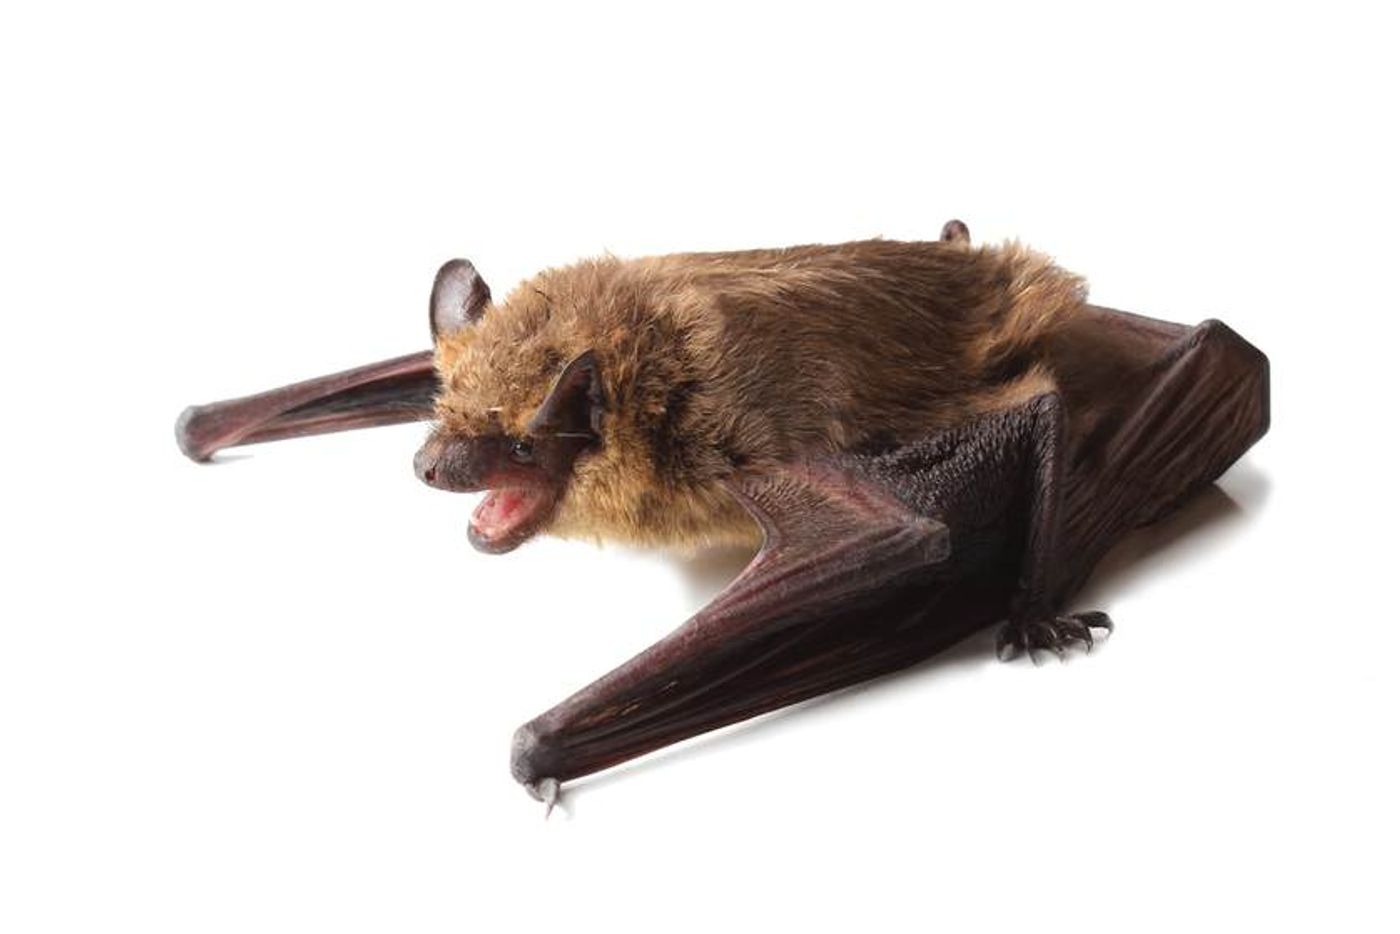 Researchers identified a new bat herpes virus.